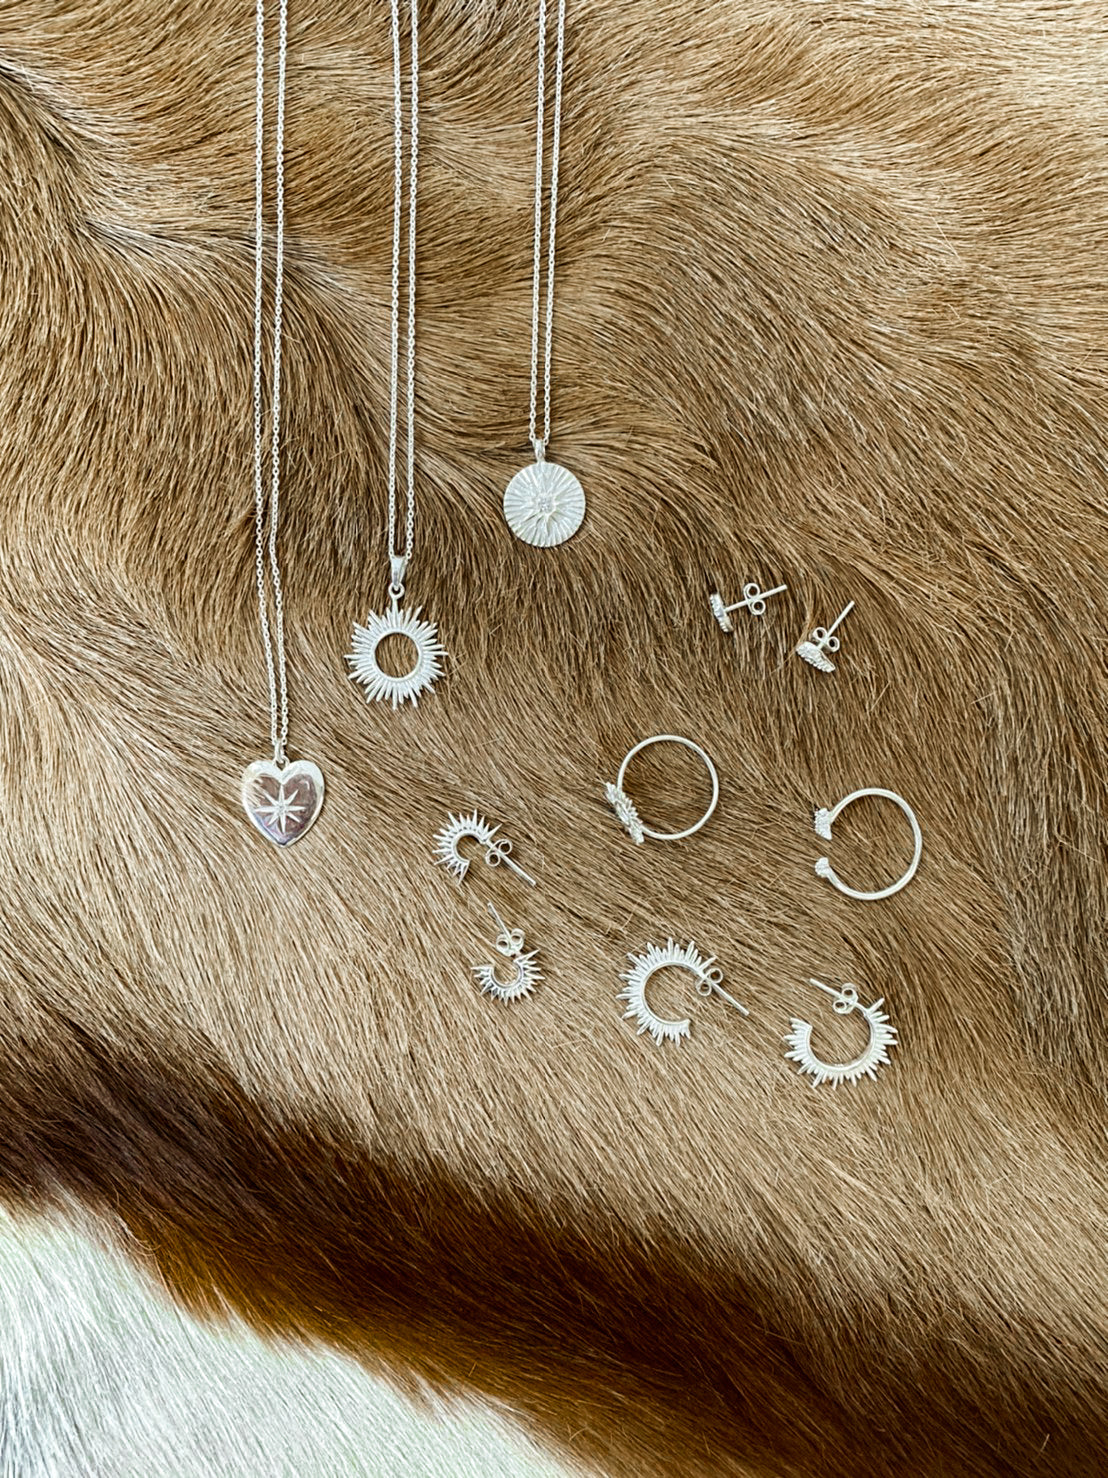 Stella Heart Necklace - Silver